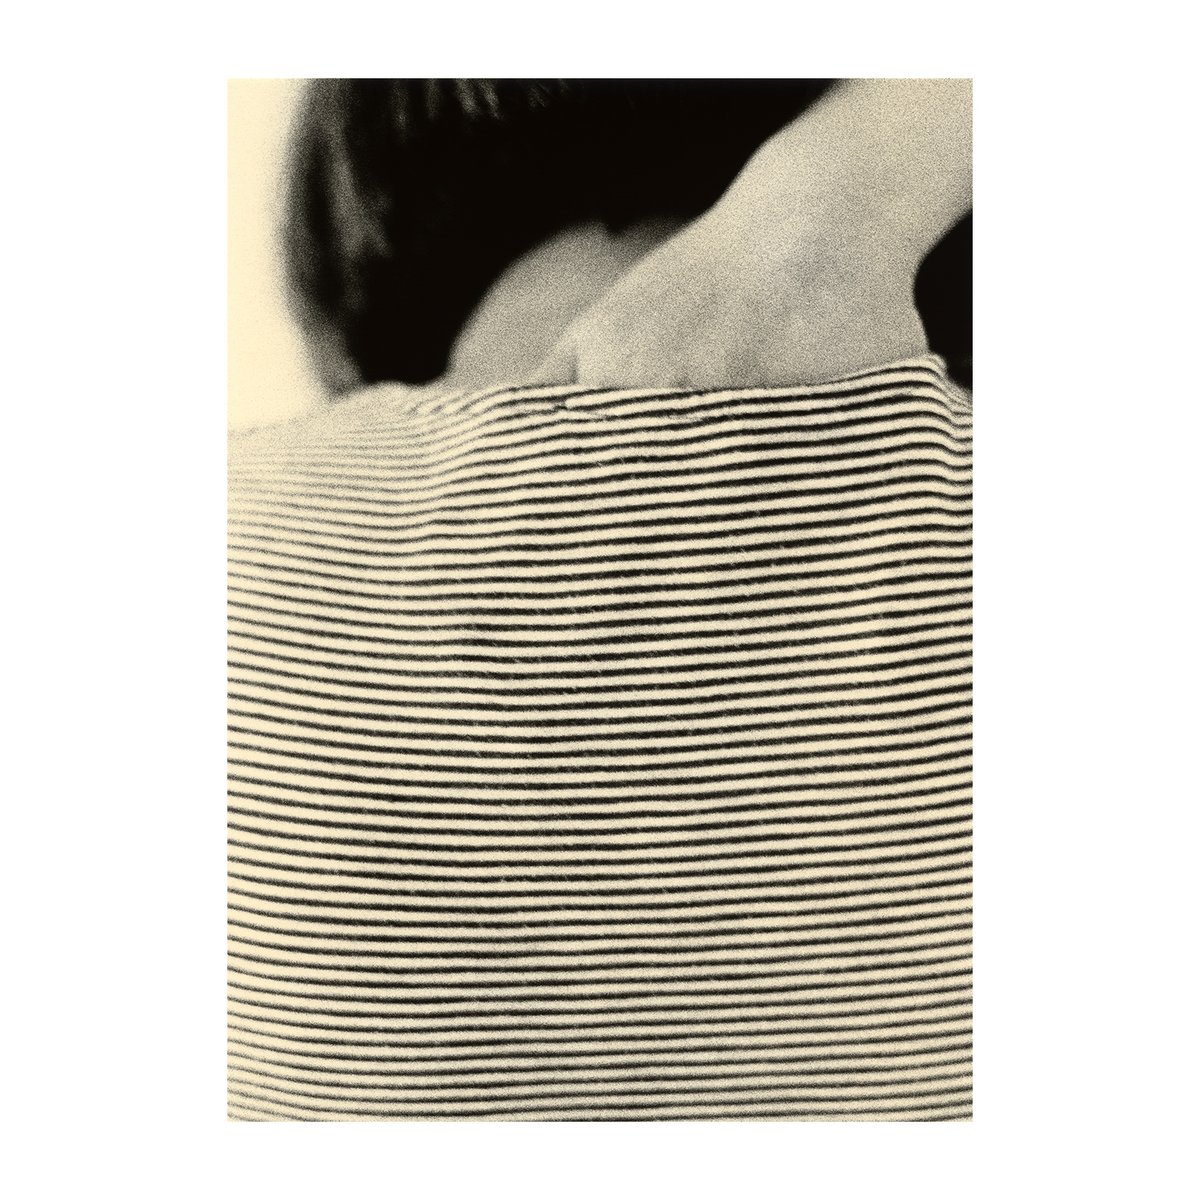 Paper Collective Striped Shirt plakat 50×70 cm